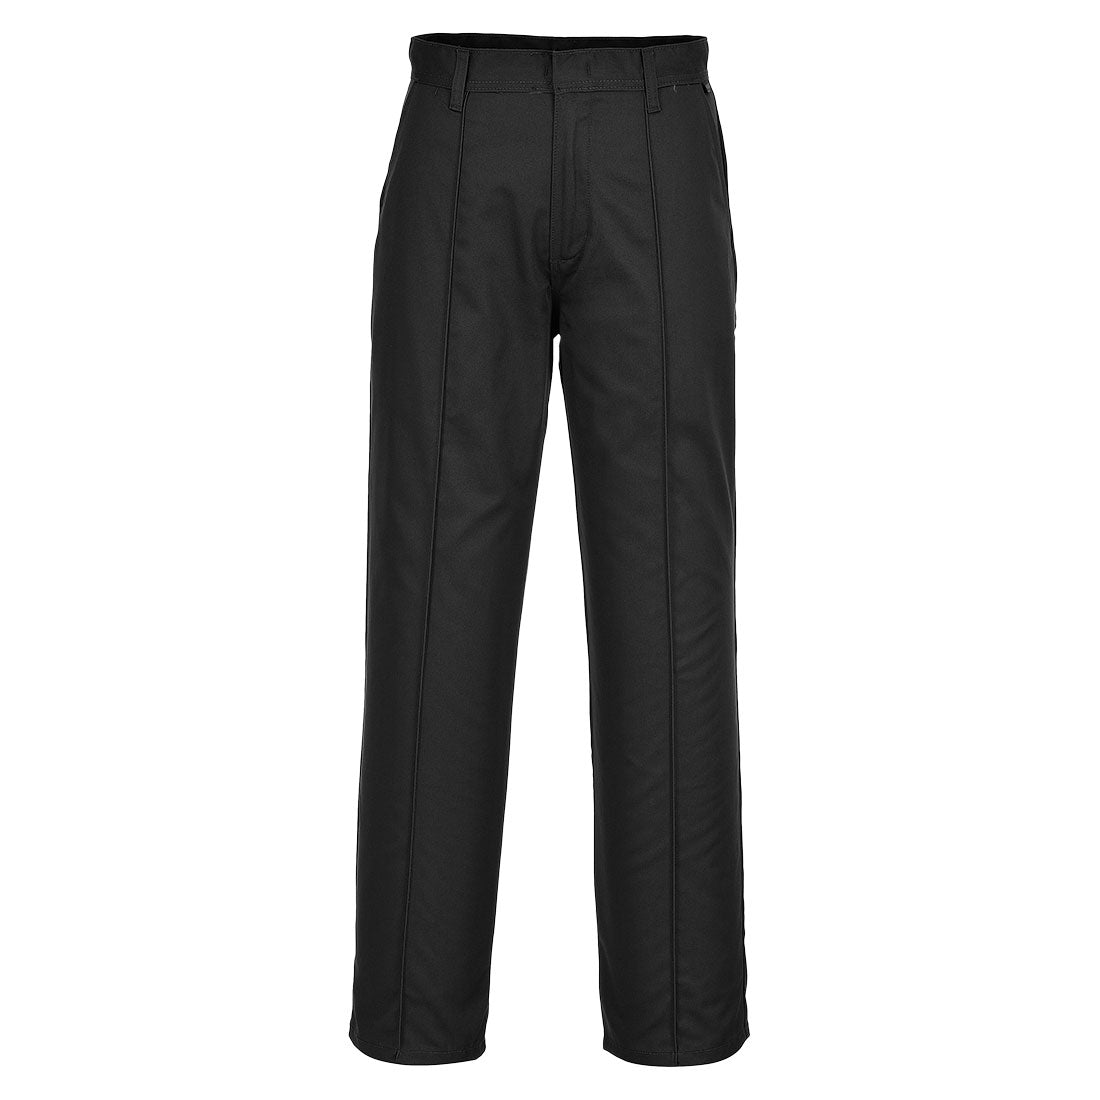 Portwest 2885 - Black Preston Mens Work Trousers with Side Pockets sz 30" Regular